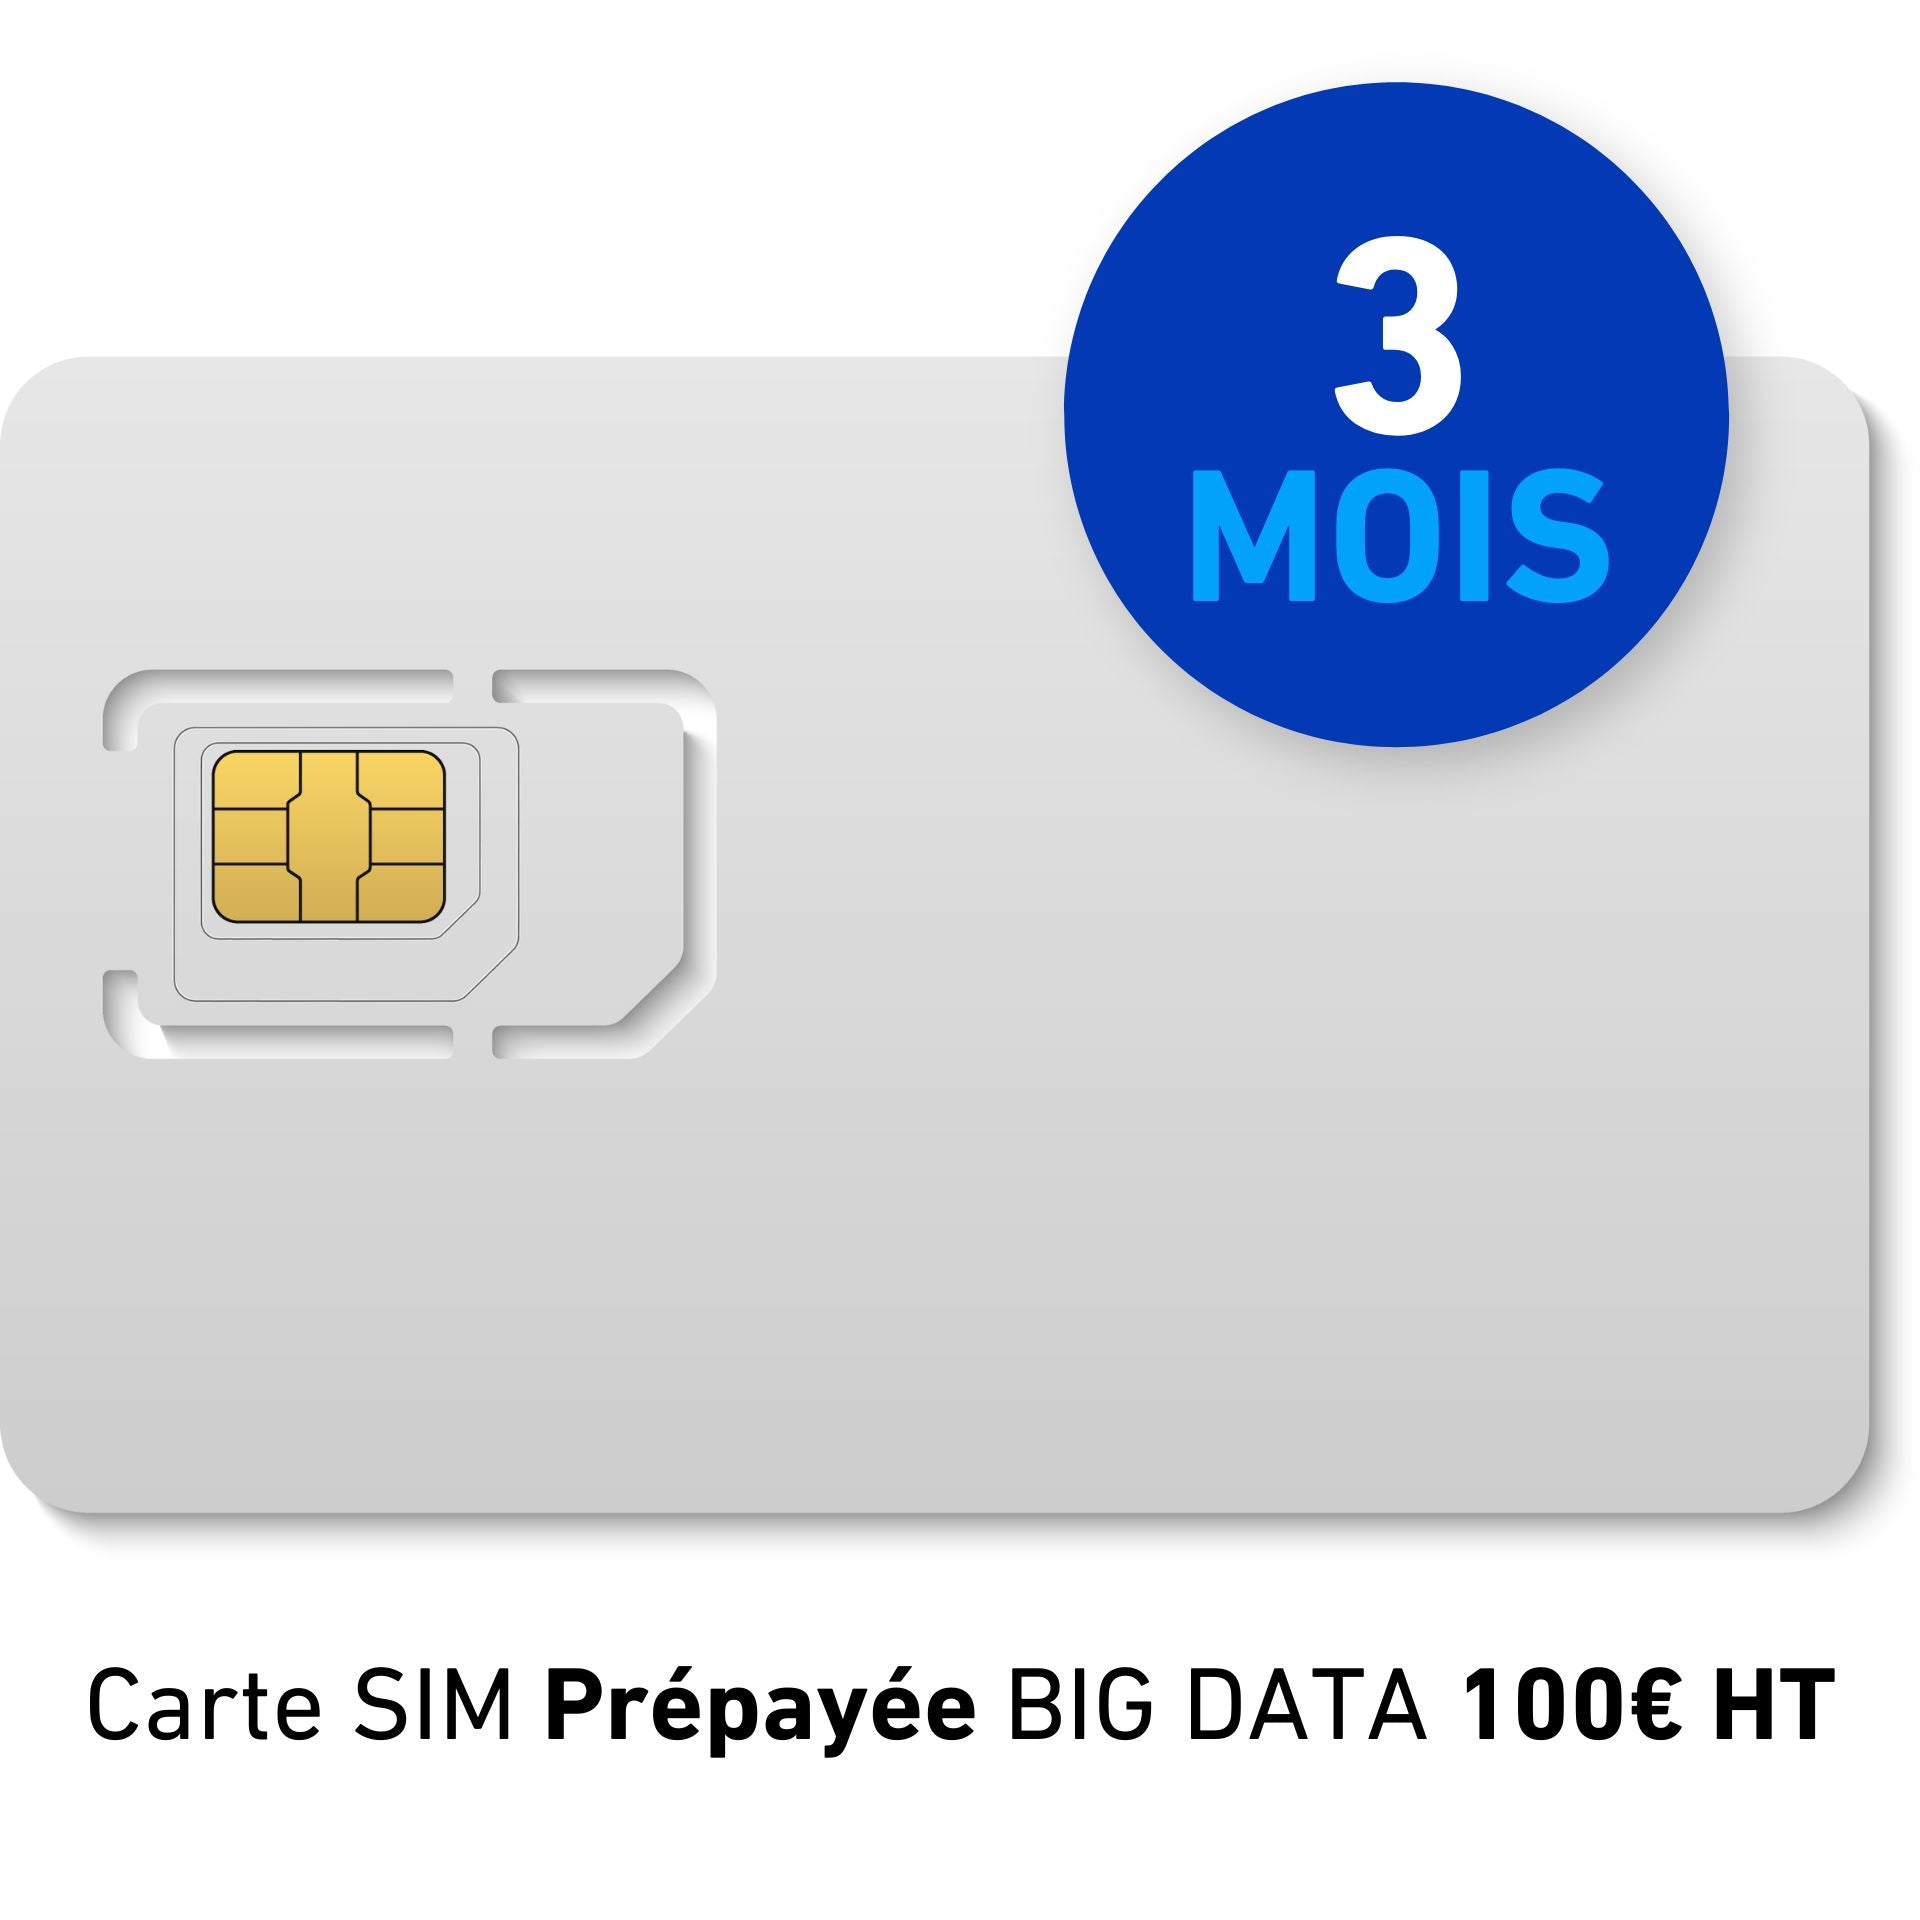 BIG DATA prepaid SIM card 100 € HT - VALIDITY 3 MONTHS